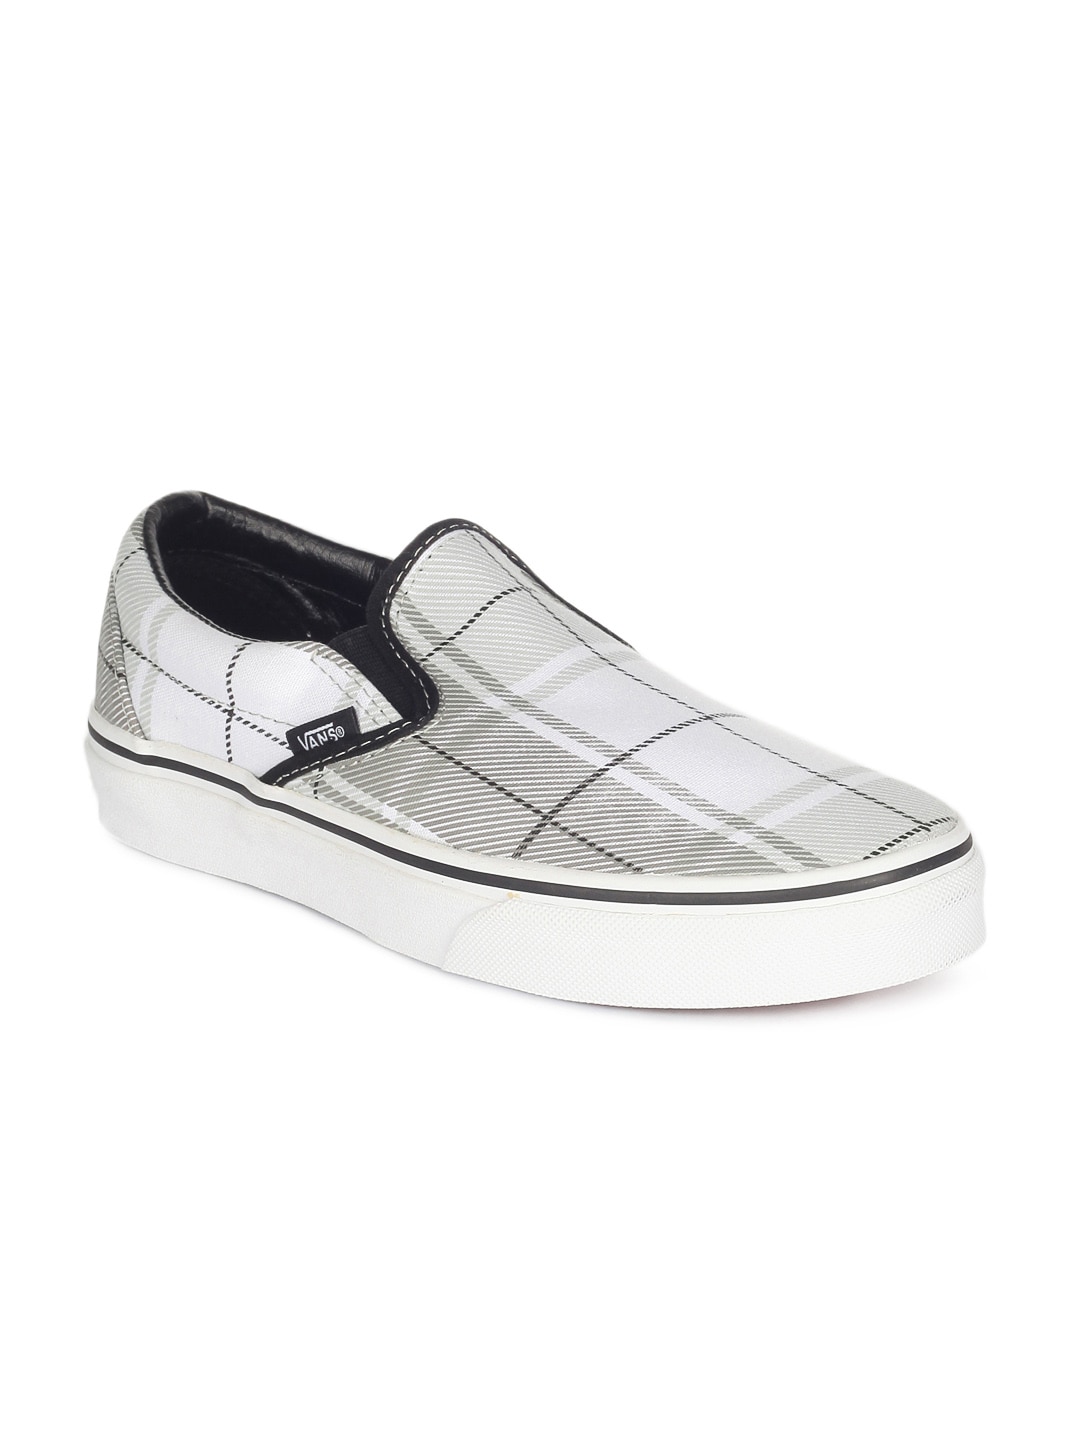 Vans Unisex White Classic Slip On Casual Shoes